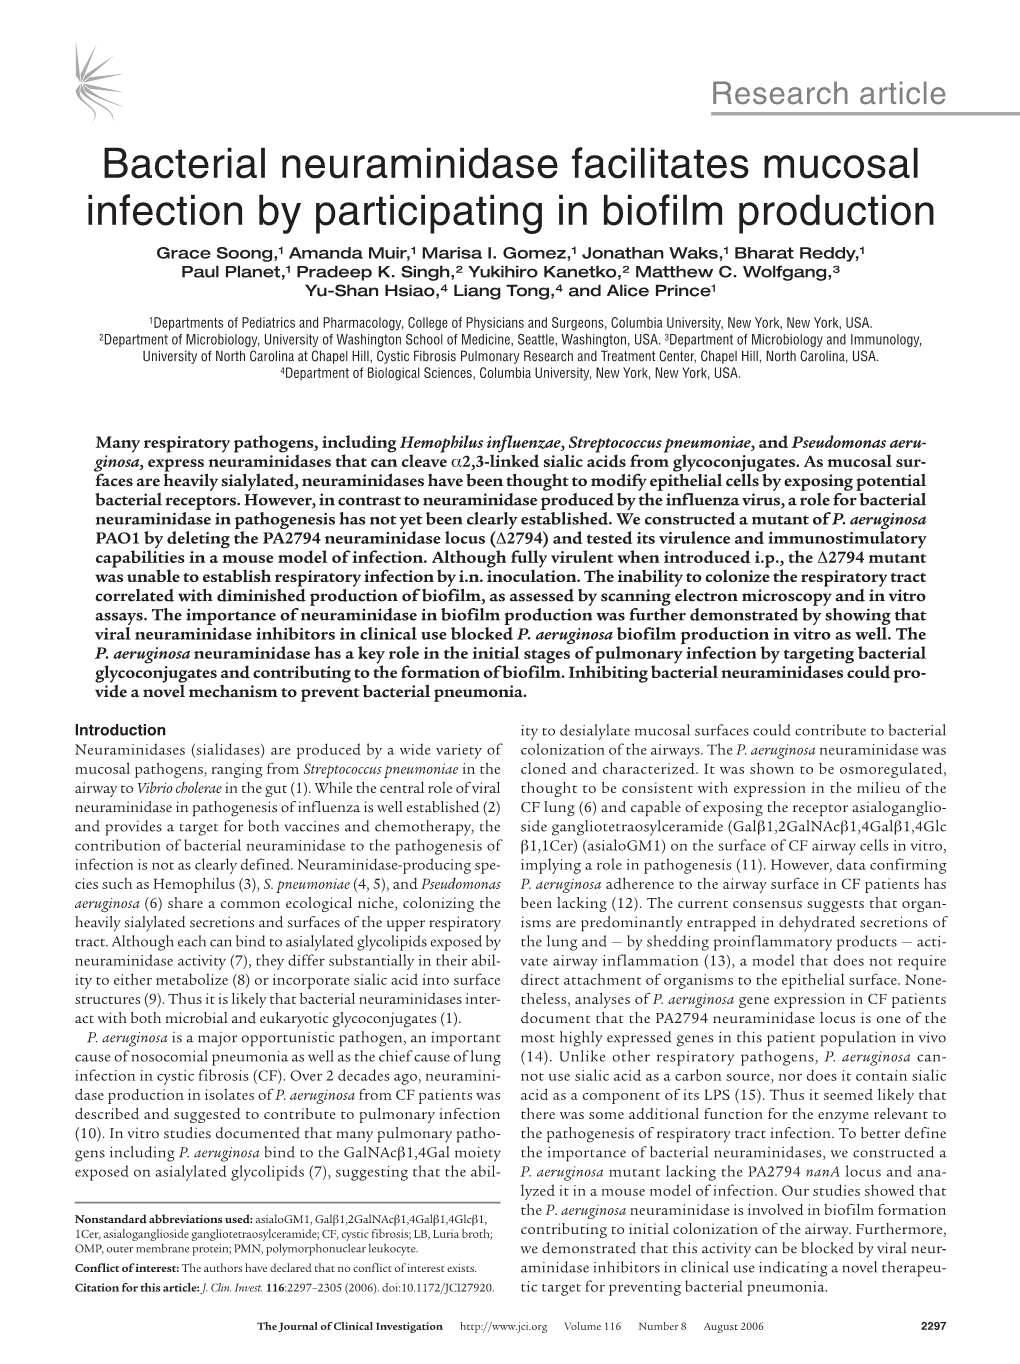 Bacterial Neuraminidase Facilitates Mucosal Infection by Participating in Biofilm Production Grace Soong,1 Amanda Muir,1 Marisa I